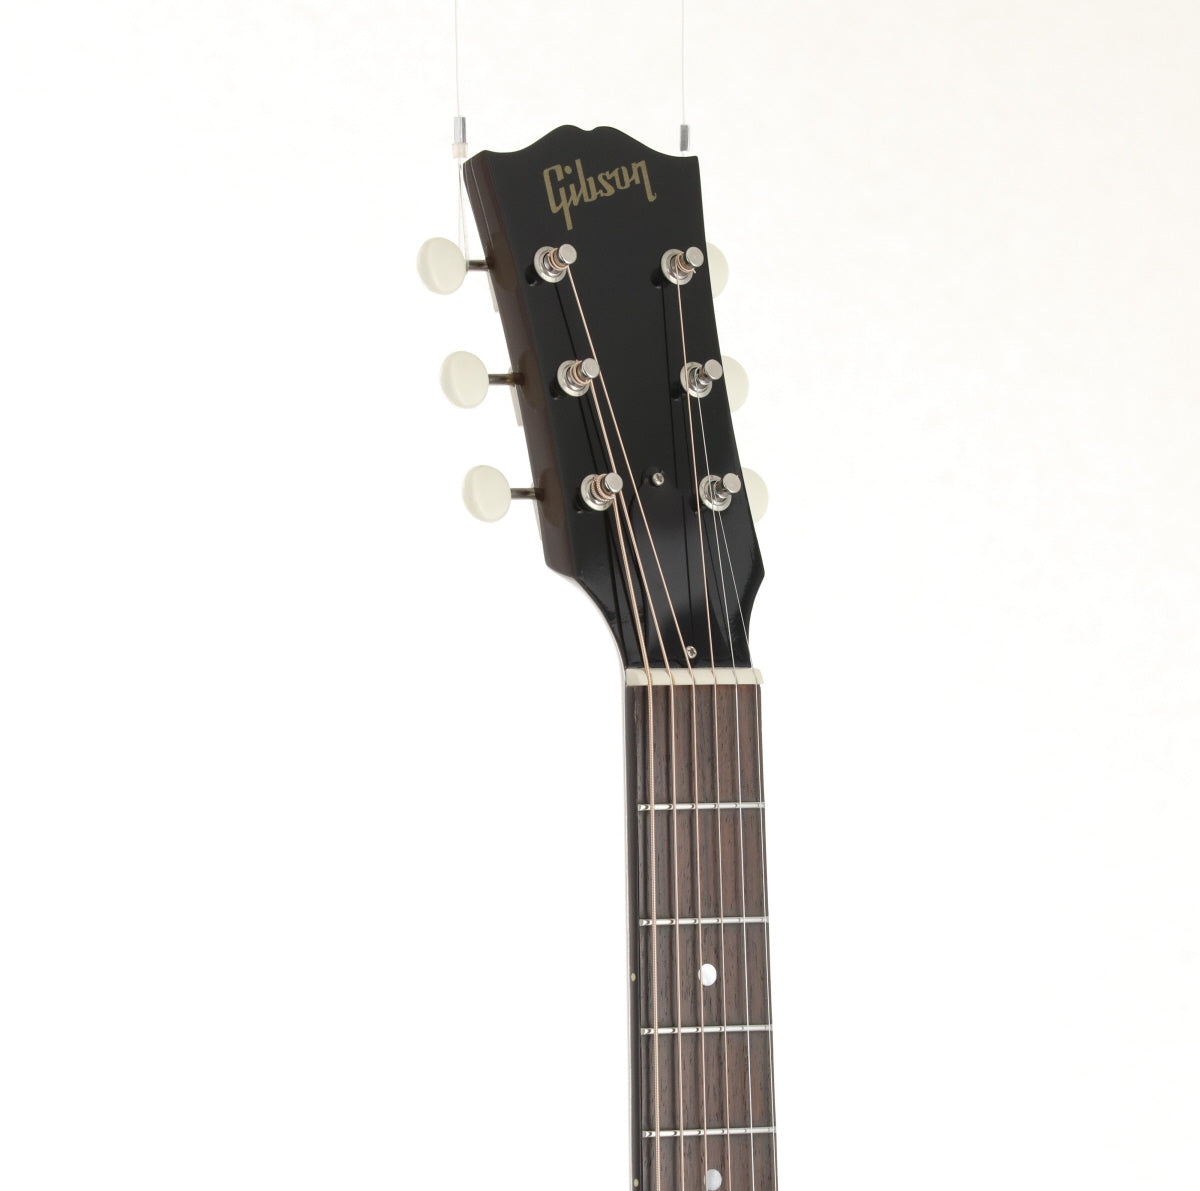 [SN 10252064] USED Gibson / 1960s J-45 ADJ Faded Cherry 2012 [03]